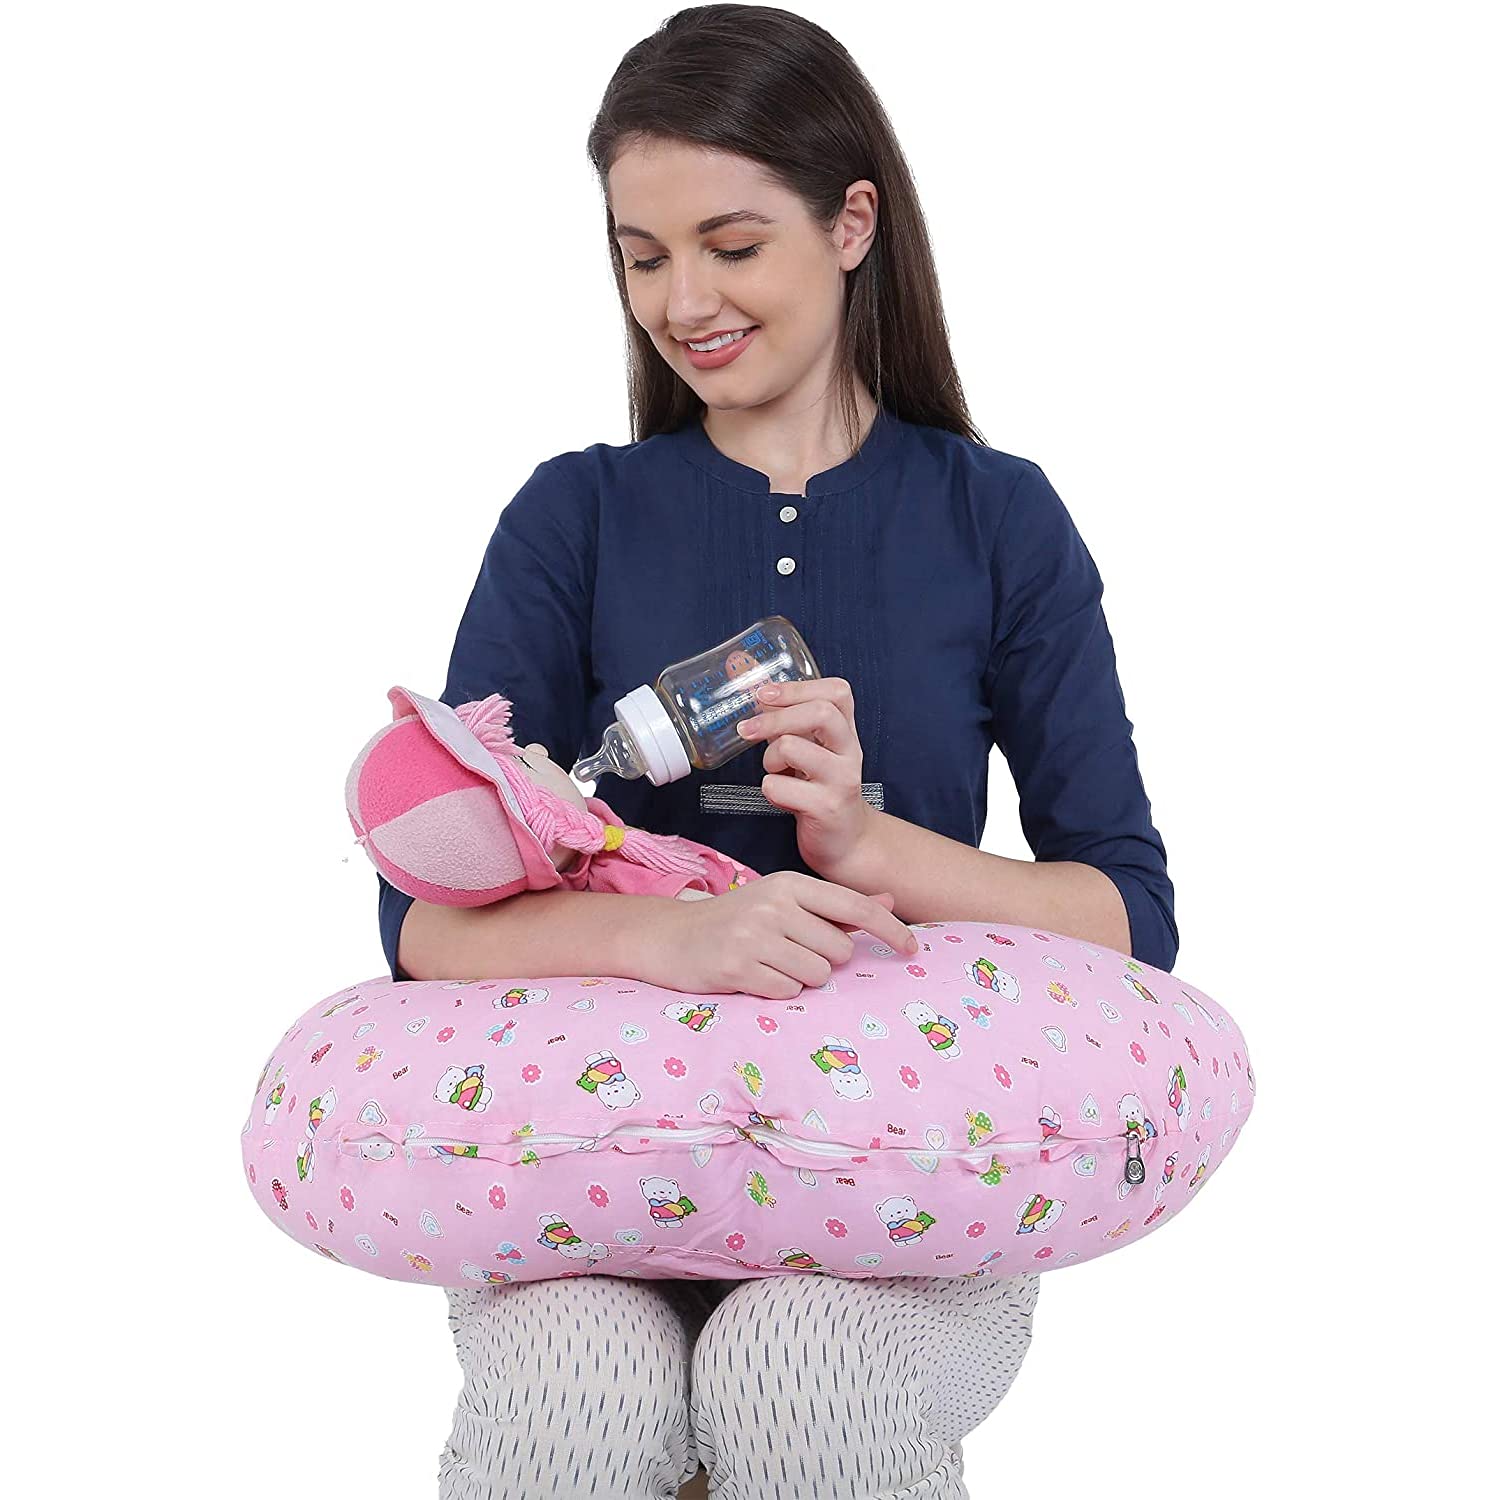 Momsyard 5 in 1 Magic Breastfeeding Pillow